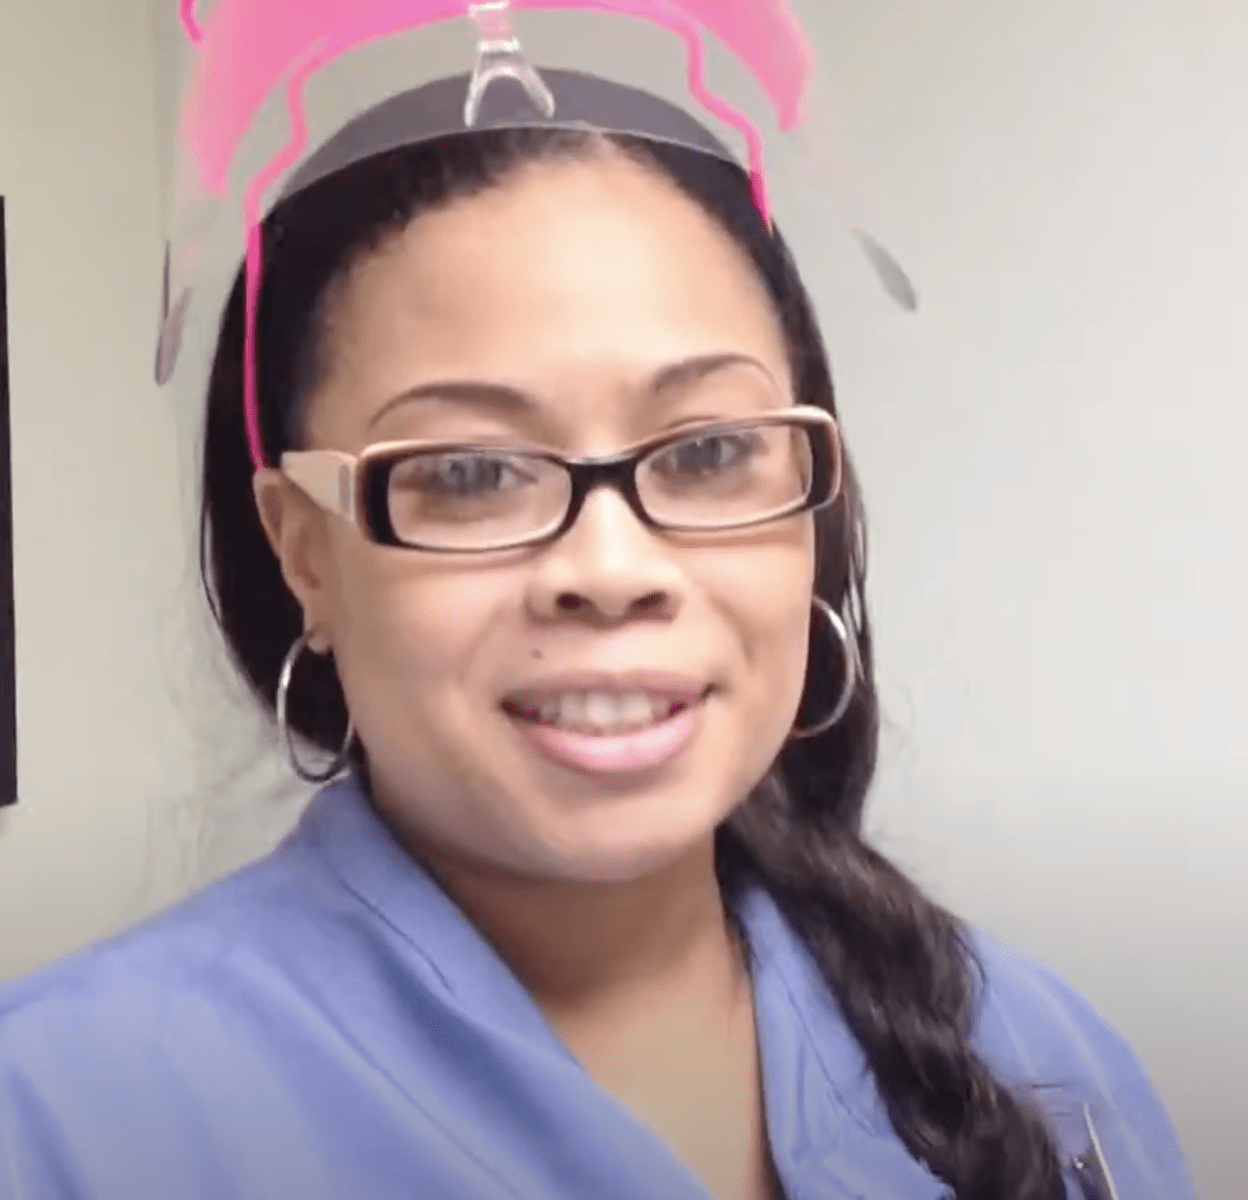 Mckayla dental vibe testimonial